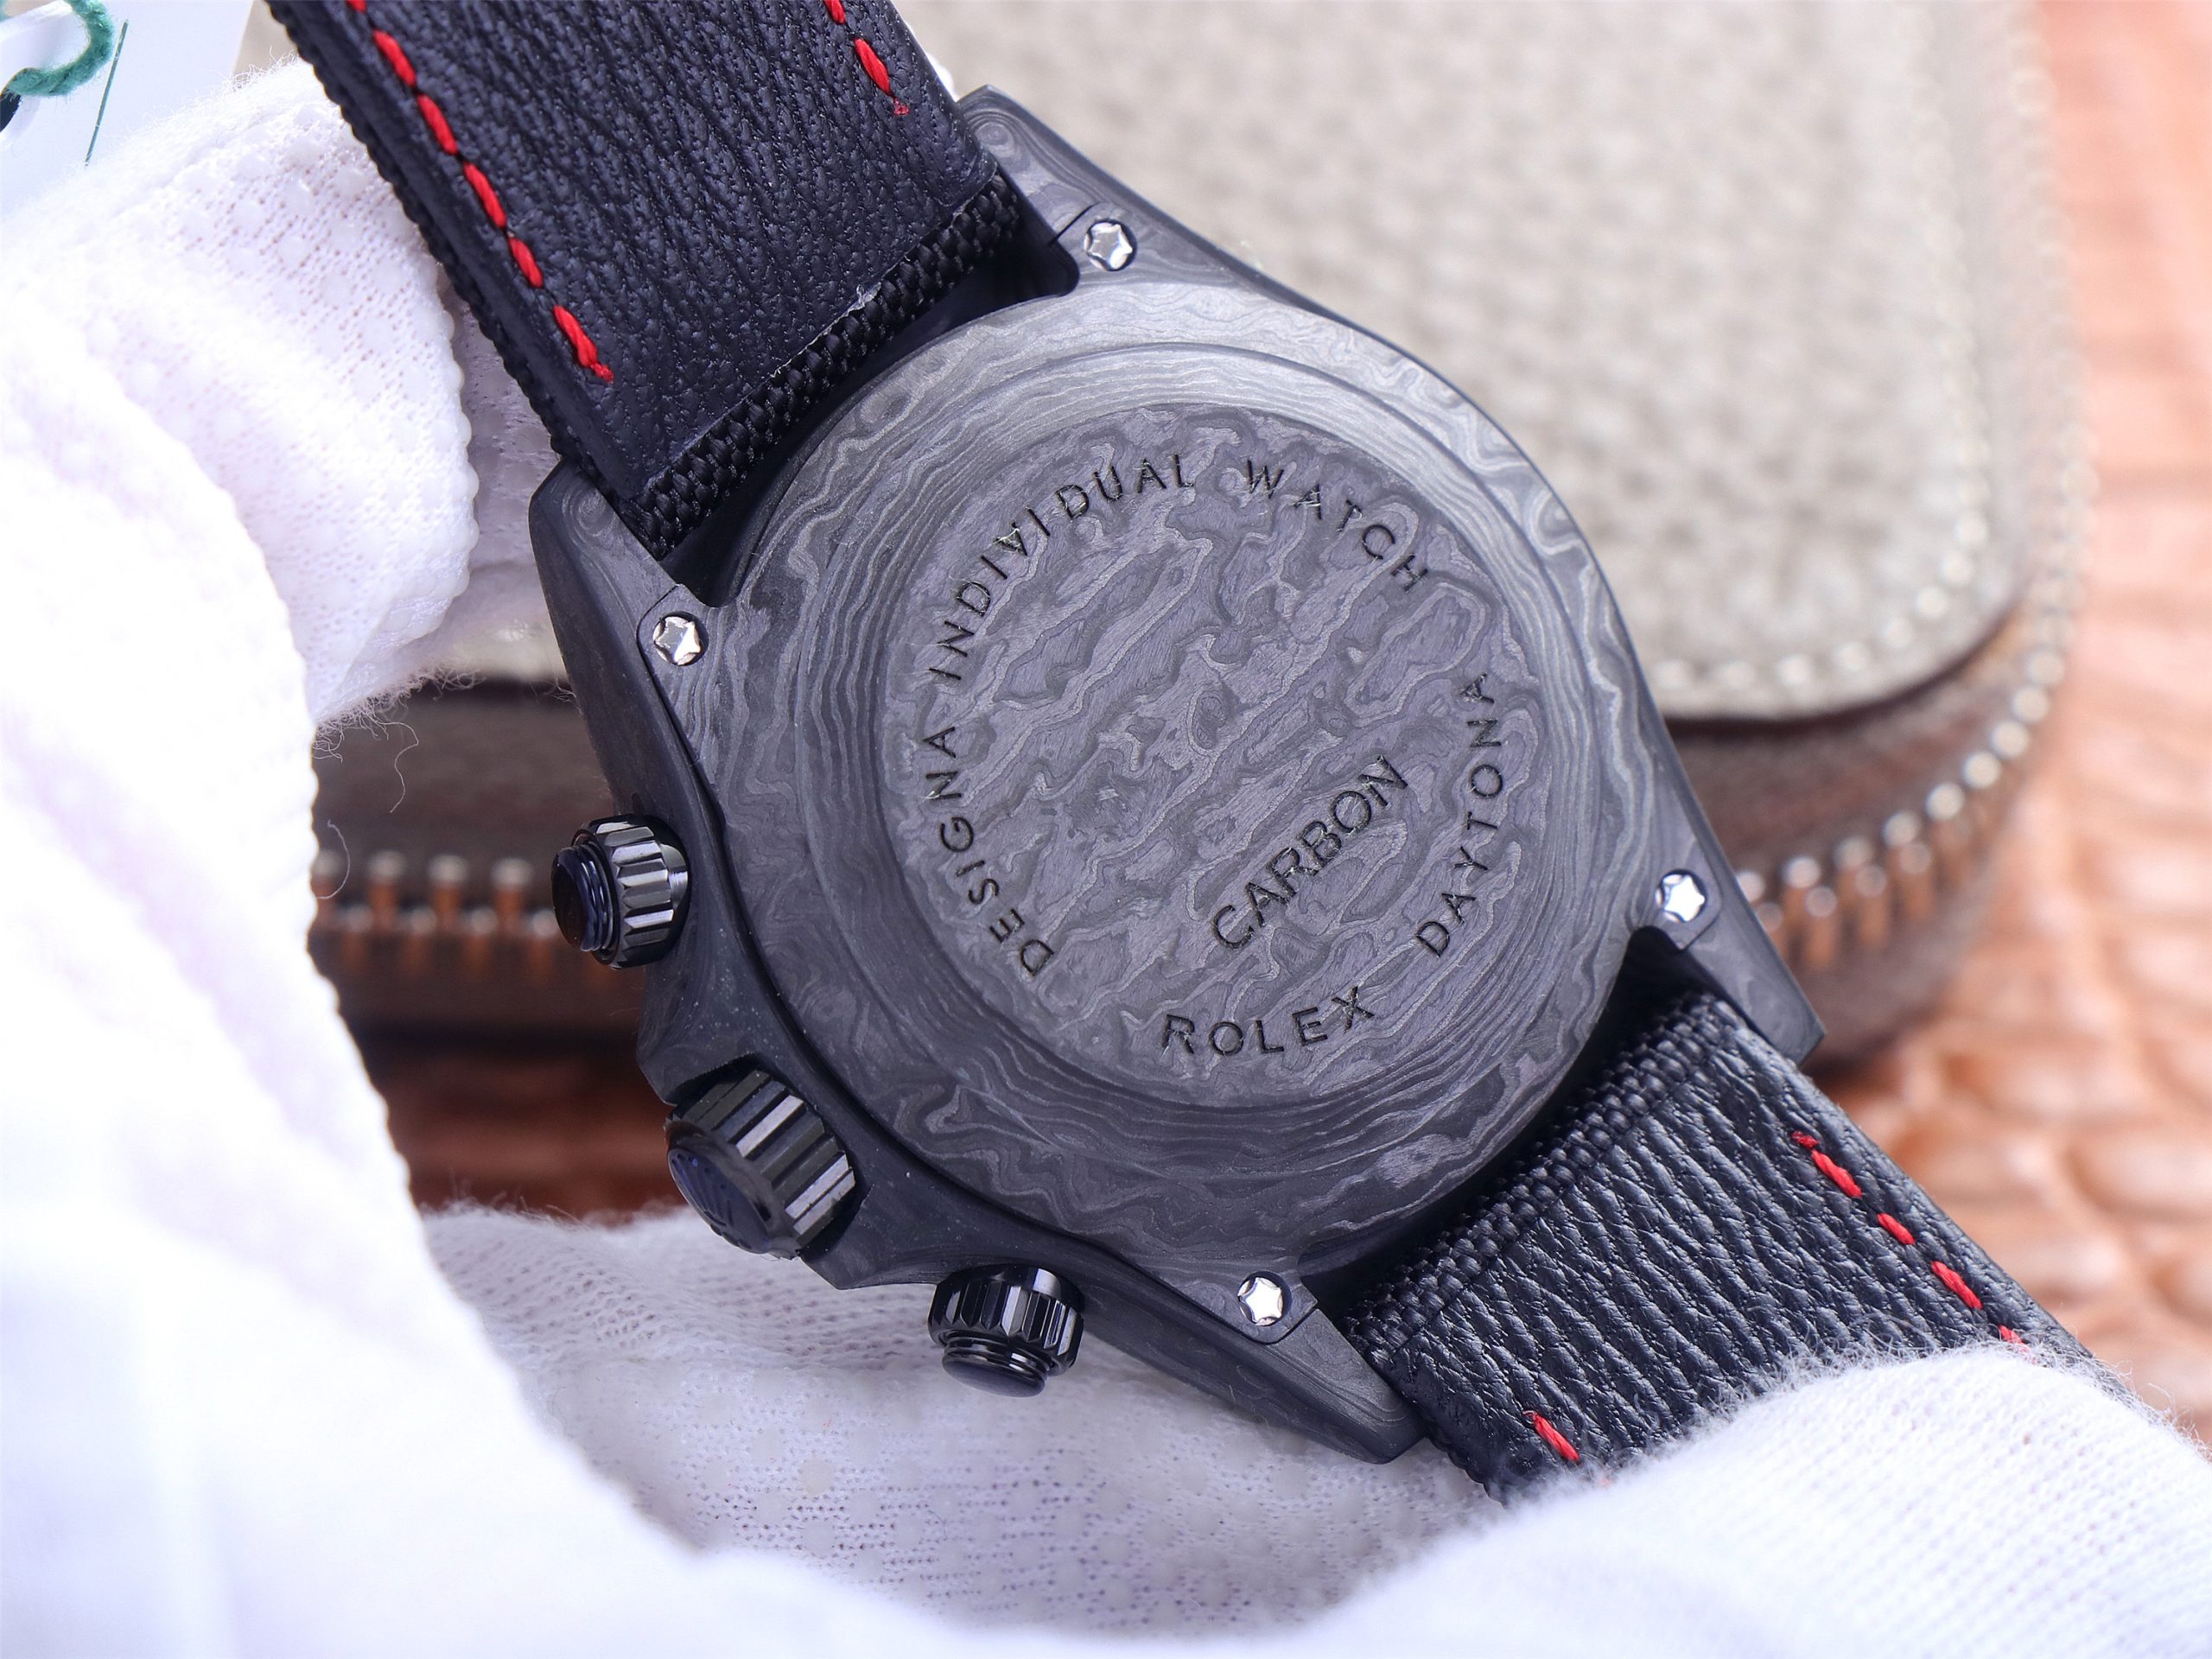 2023021205133880 scaled - 勞力士迪通拿繫列復刻價格 JH廠手錶勞力士迪通拿碳纖維定制版￥4580